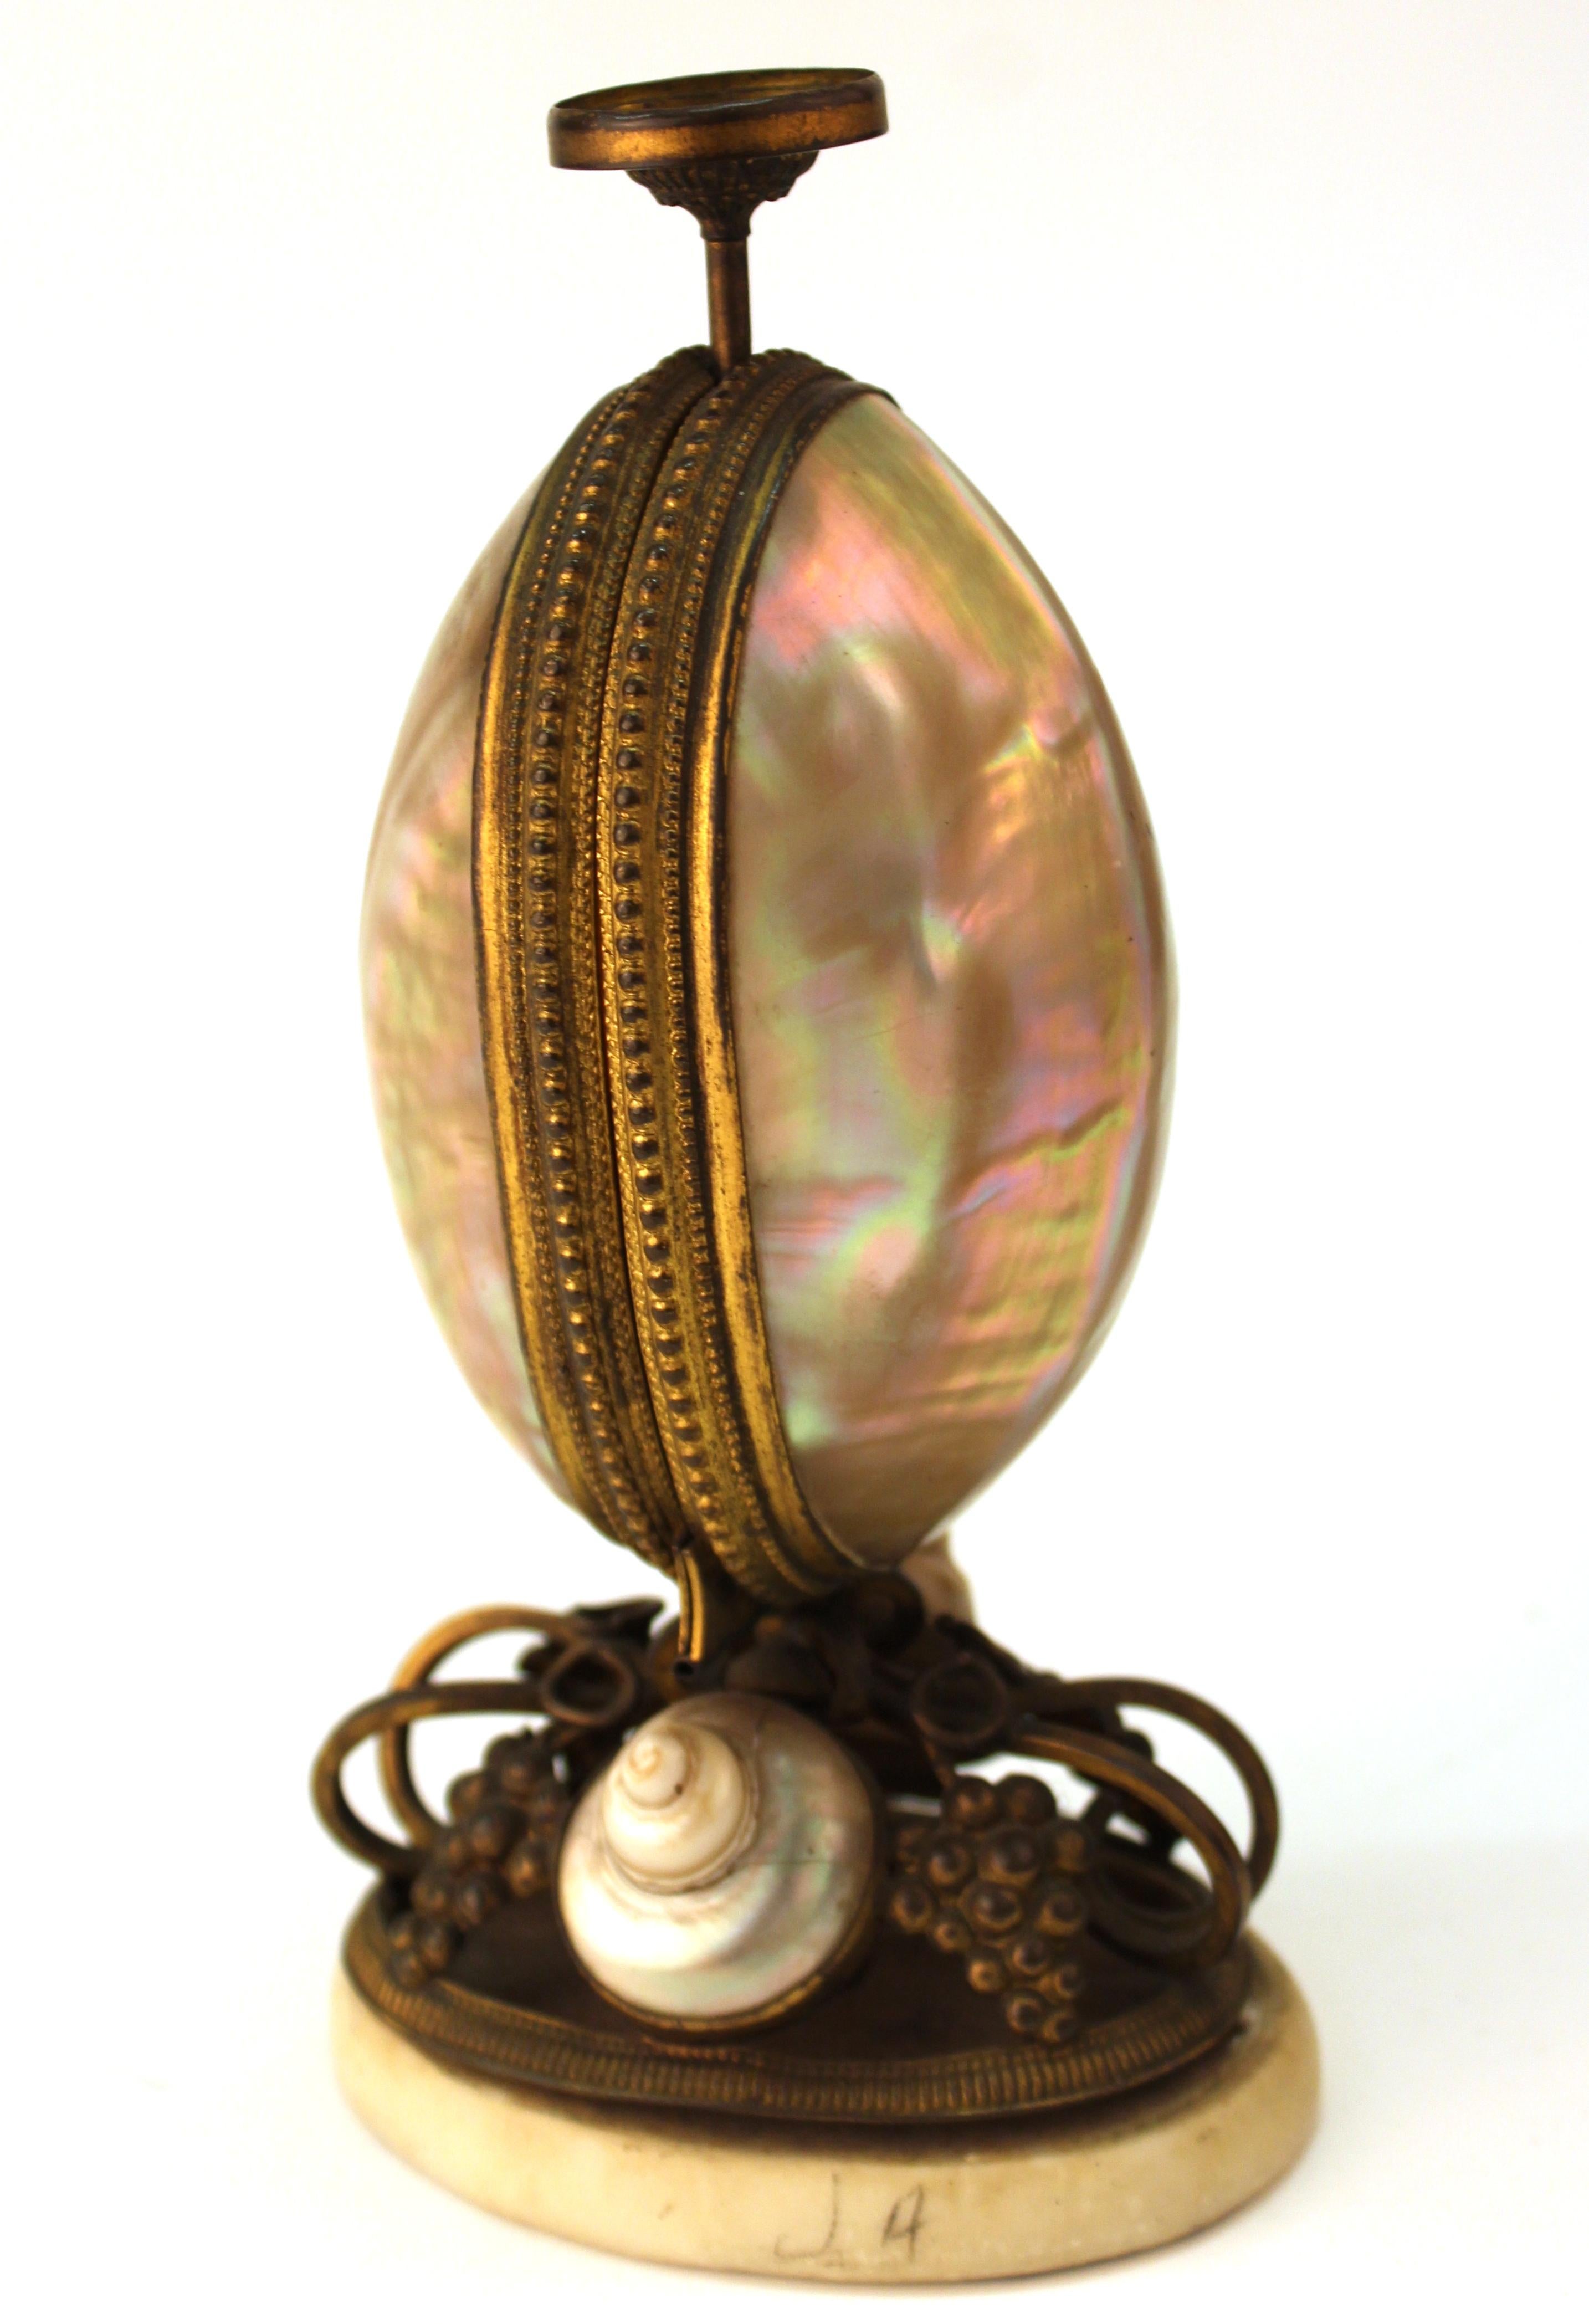 19th Century French Nautilus Shell and Ormolu Gilt Metal Mounted Egg-Shaped Mechanical Holder